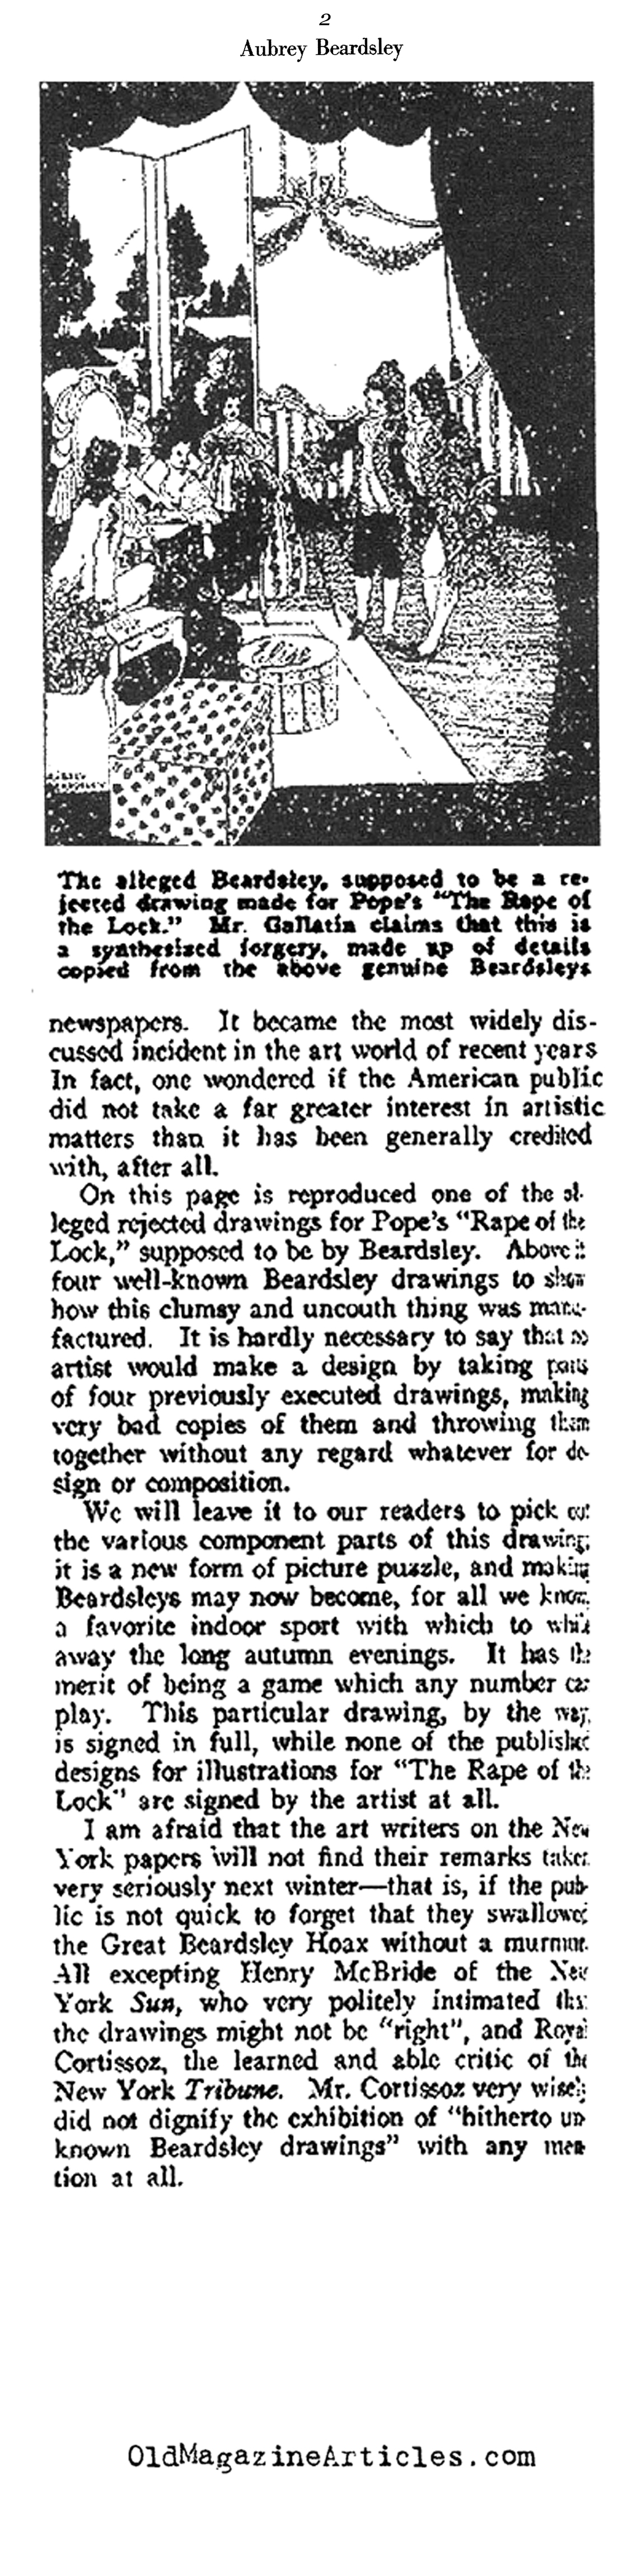 Art Sacandal: Aubrey Beardsley Forged (Vanity Fair Magazine, 1919)